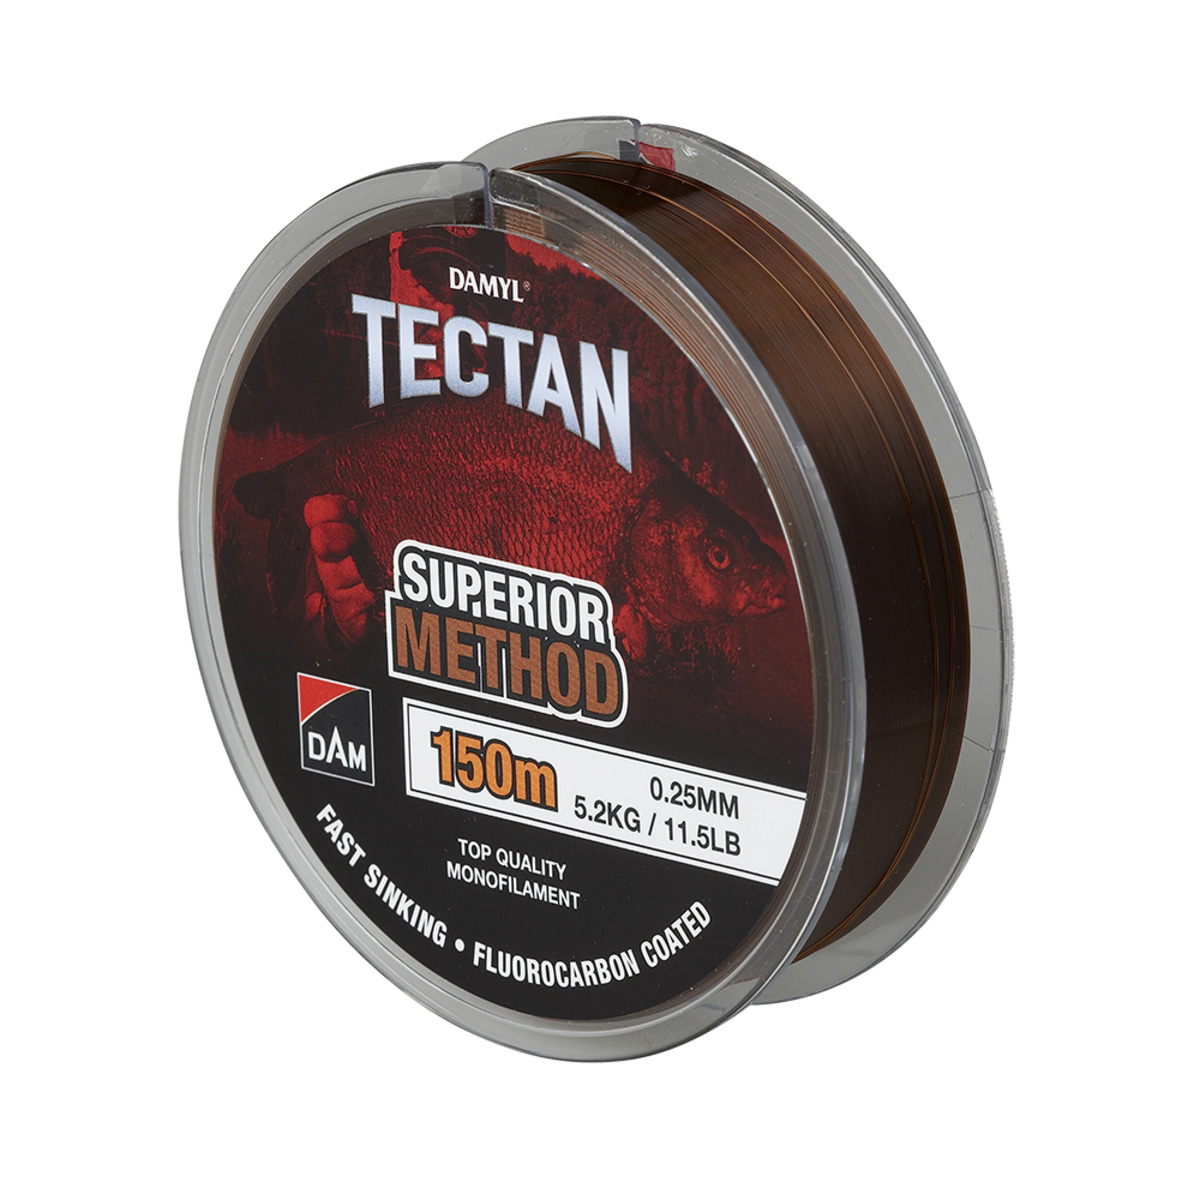 Dam Tectan Superior Fcc Method 150m - 0.14MM 1.8KG 4LBS BROWN